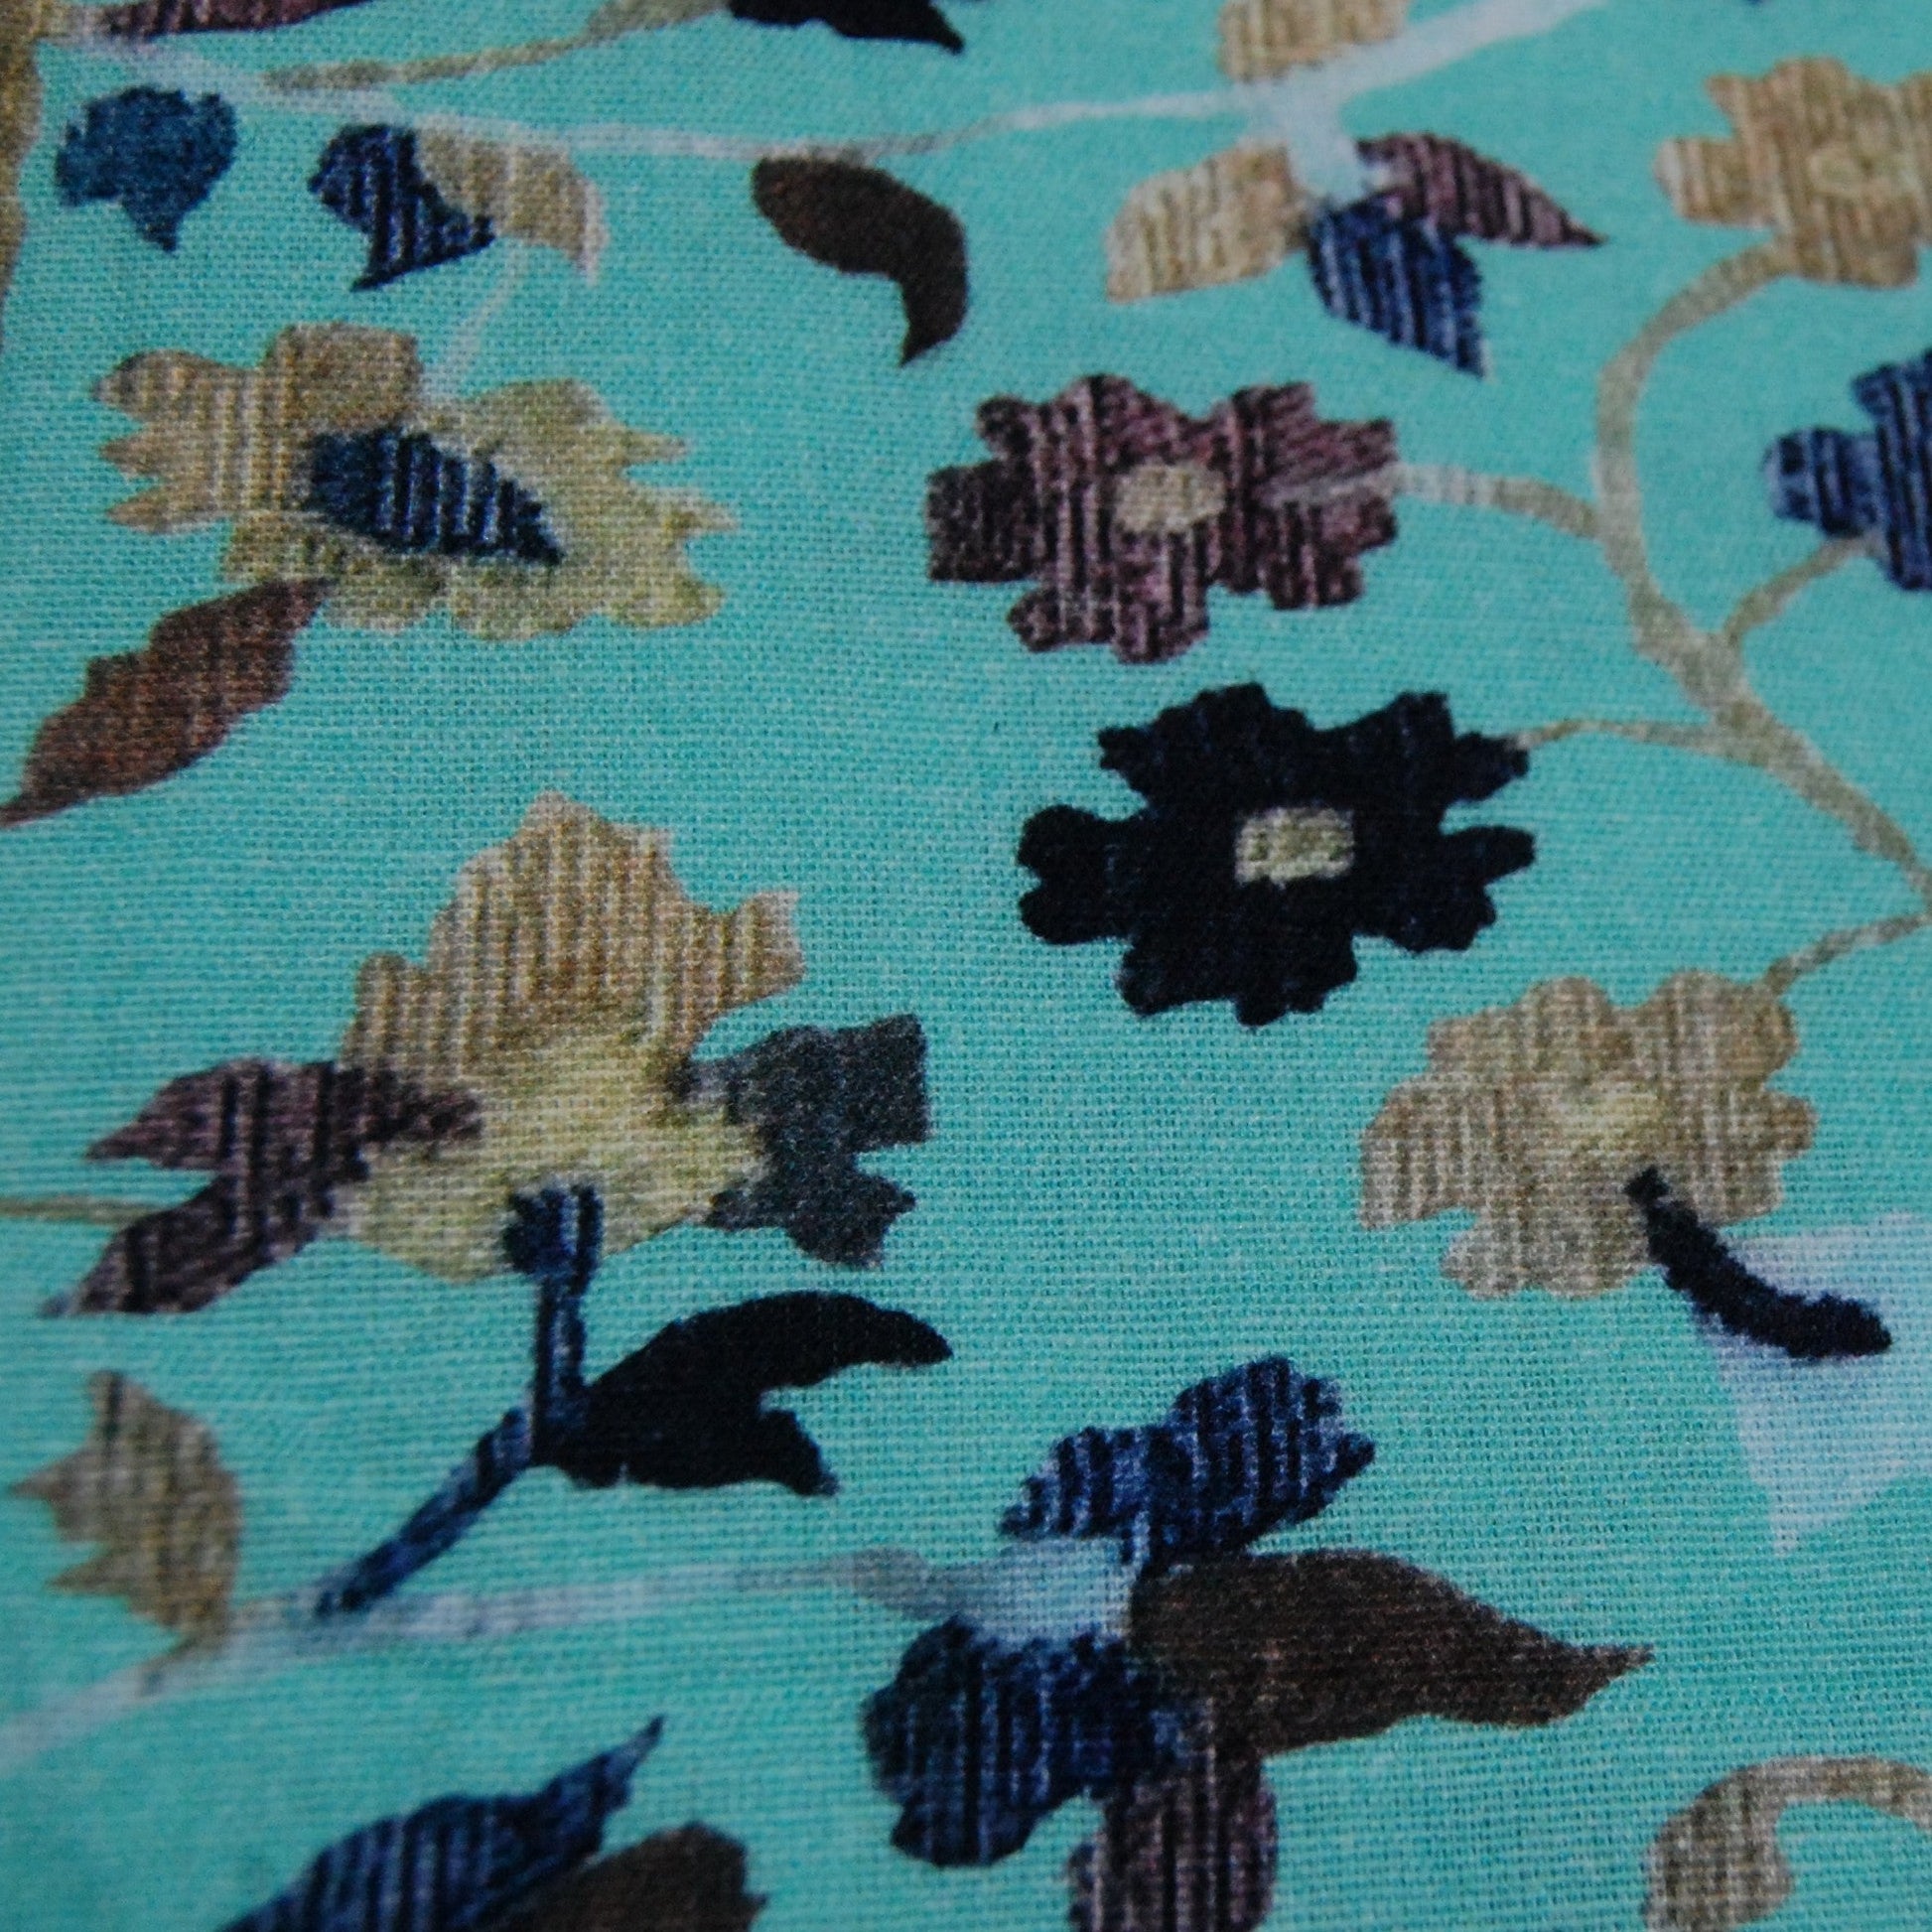 Sky Blue Floral Print Cotton Linen Fabric Trade UNO